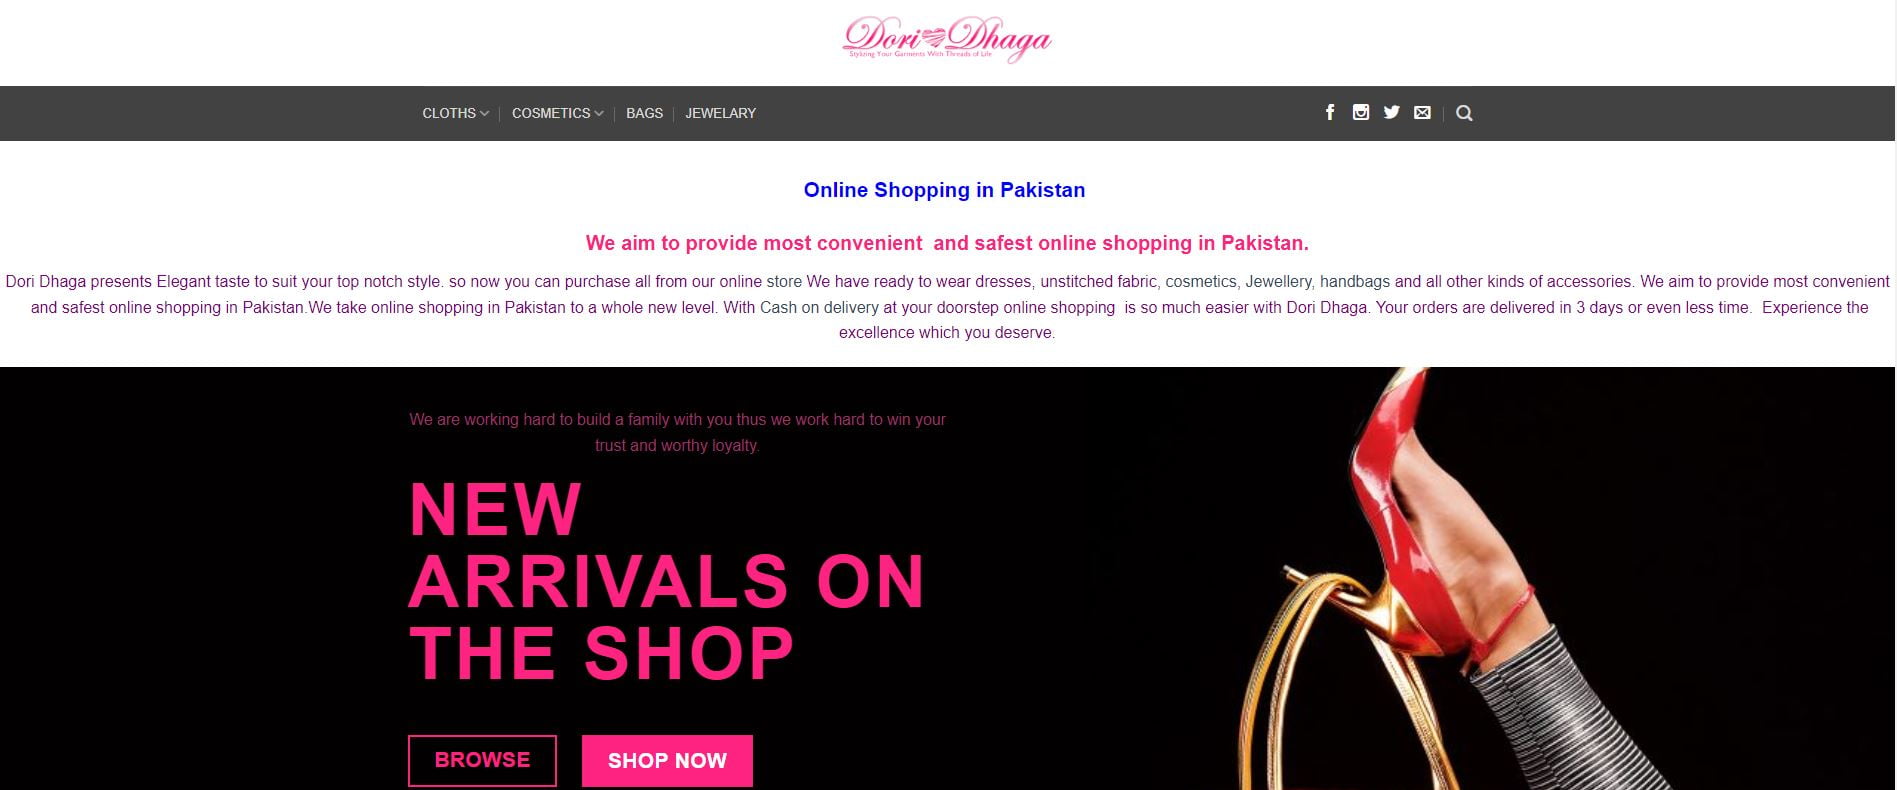 Dori Dhaga Clothing Brand Marketing Website